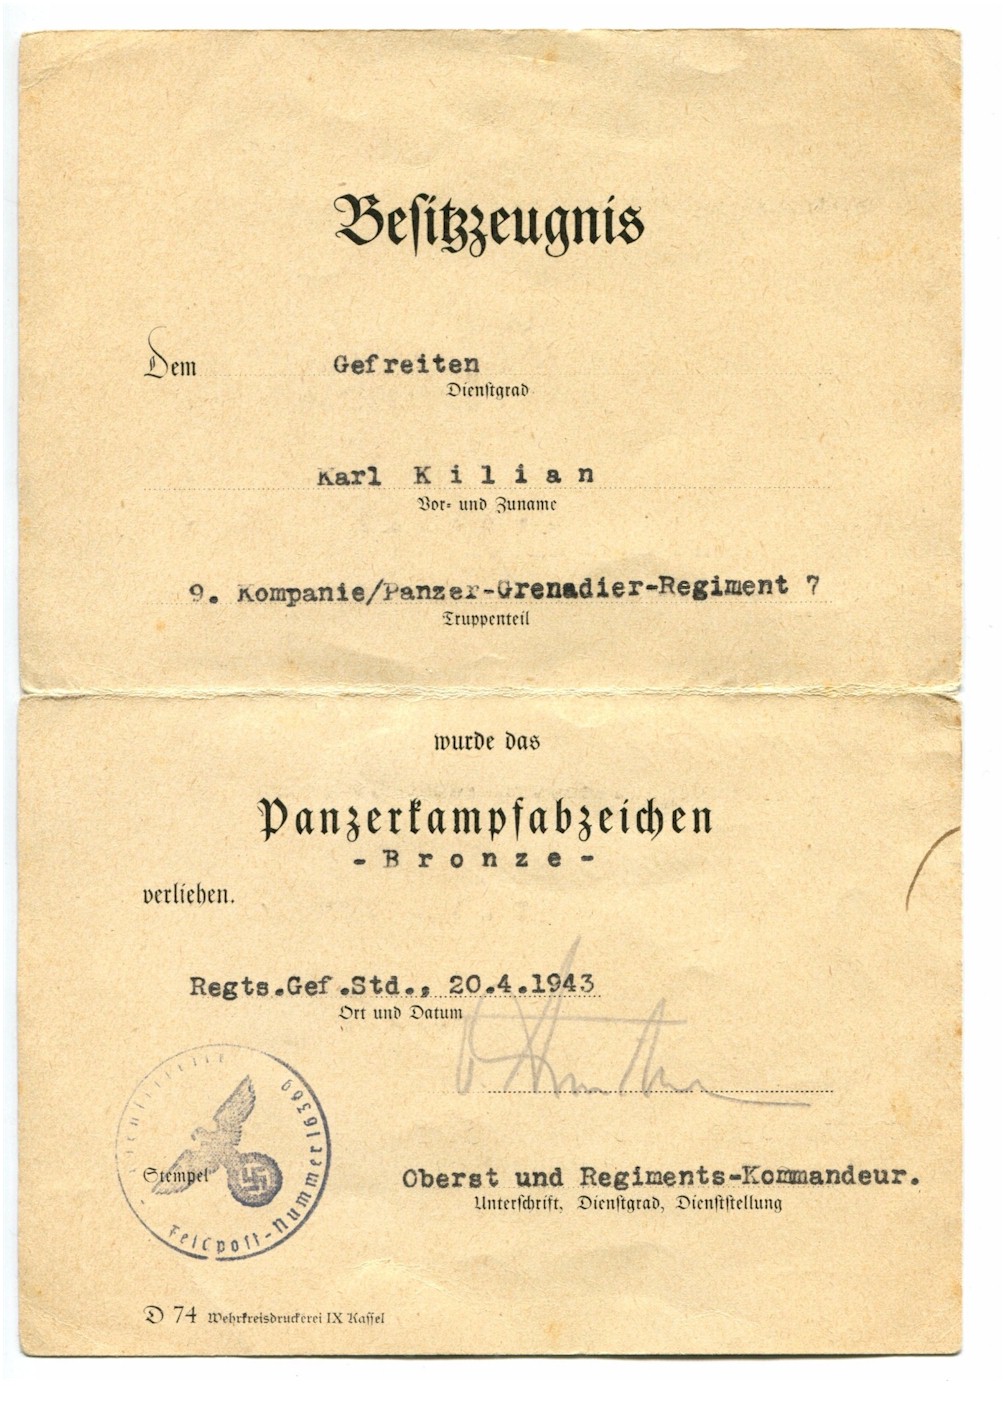 GERMAN WW2 AWARD DOCUMENT FOR PANZER ASSAULT BADGE IN BRONZE